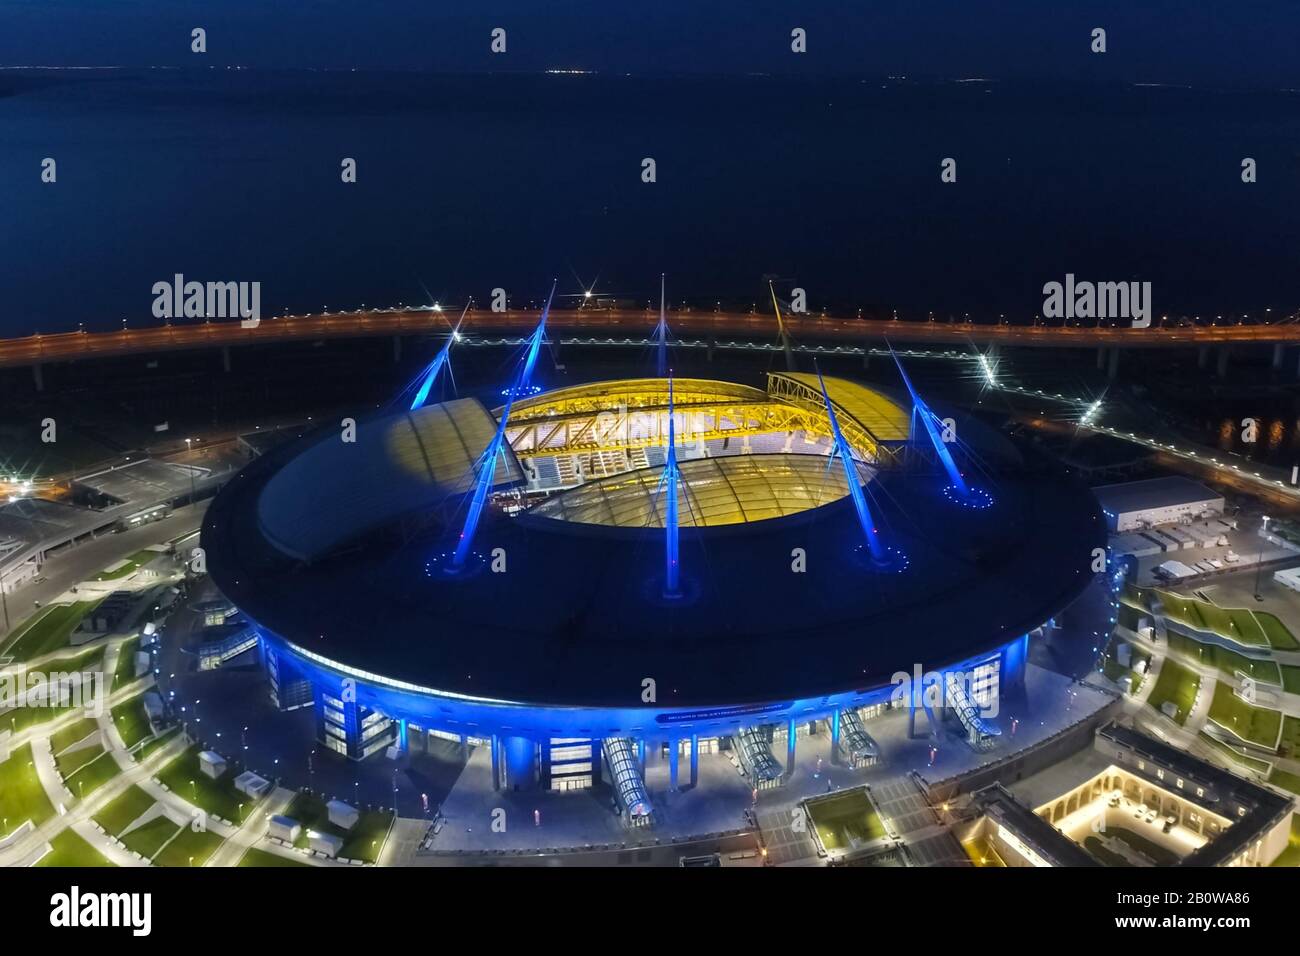 Saint petersburg stadium aerial hi-res stock photography and images - Alamy